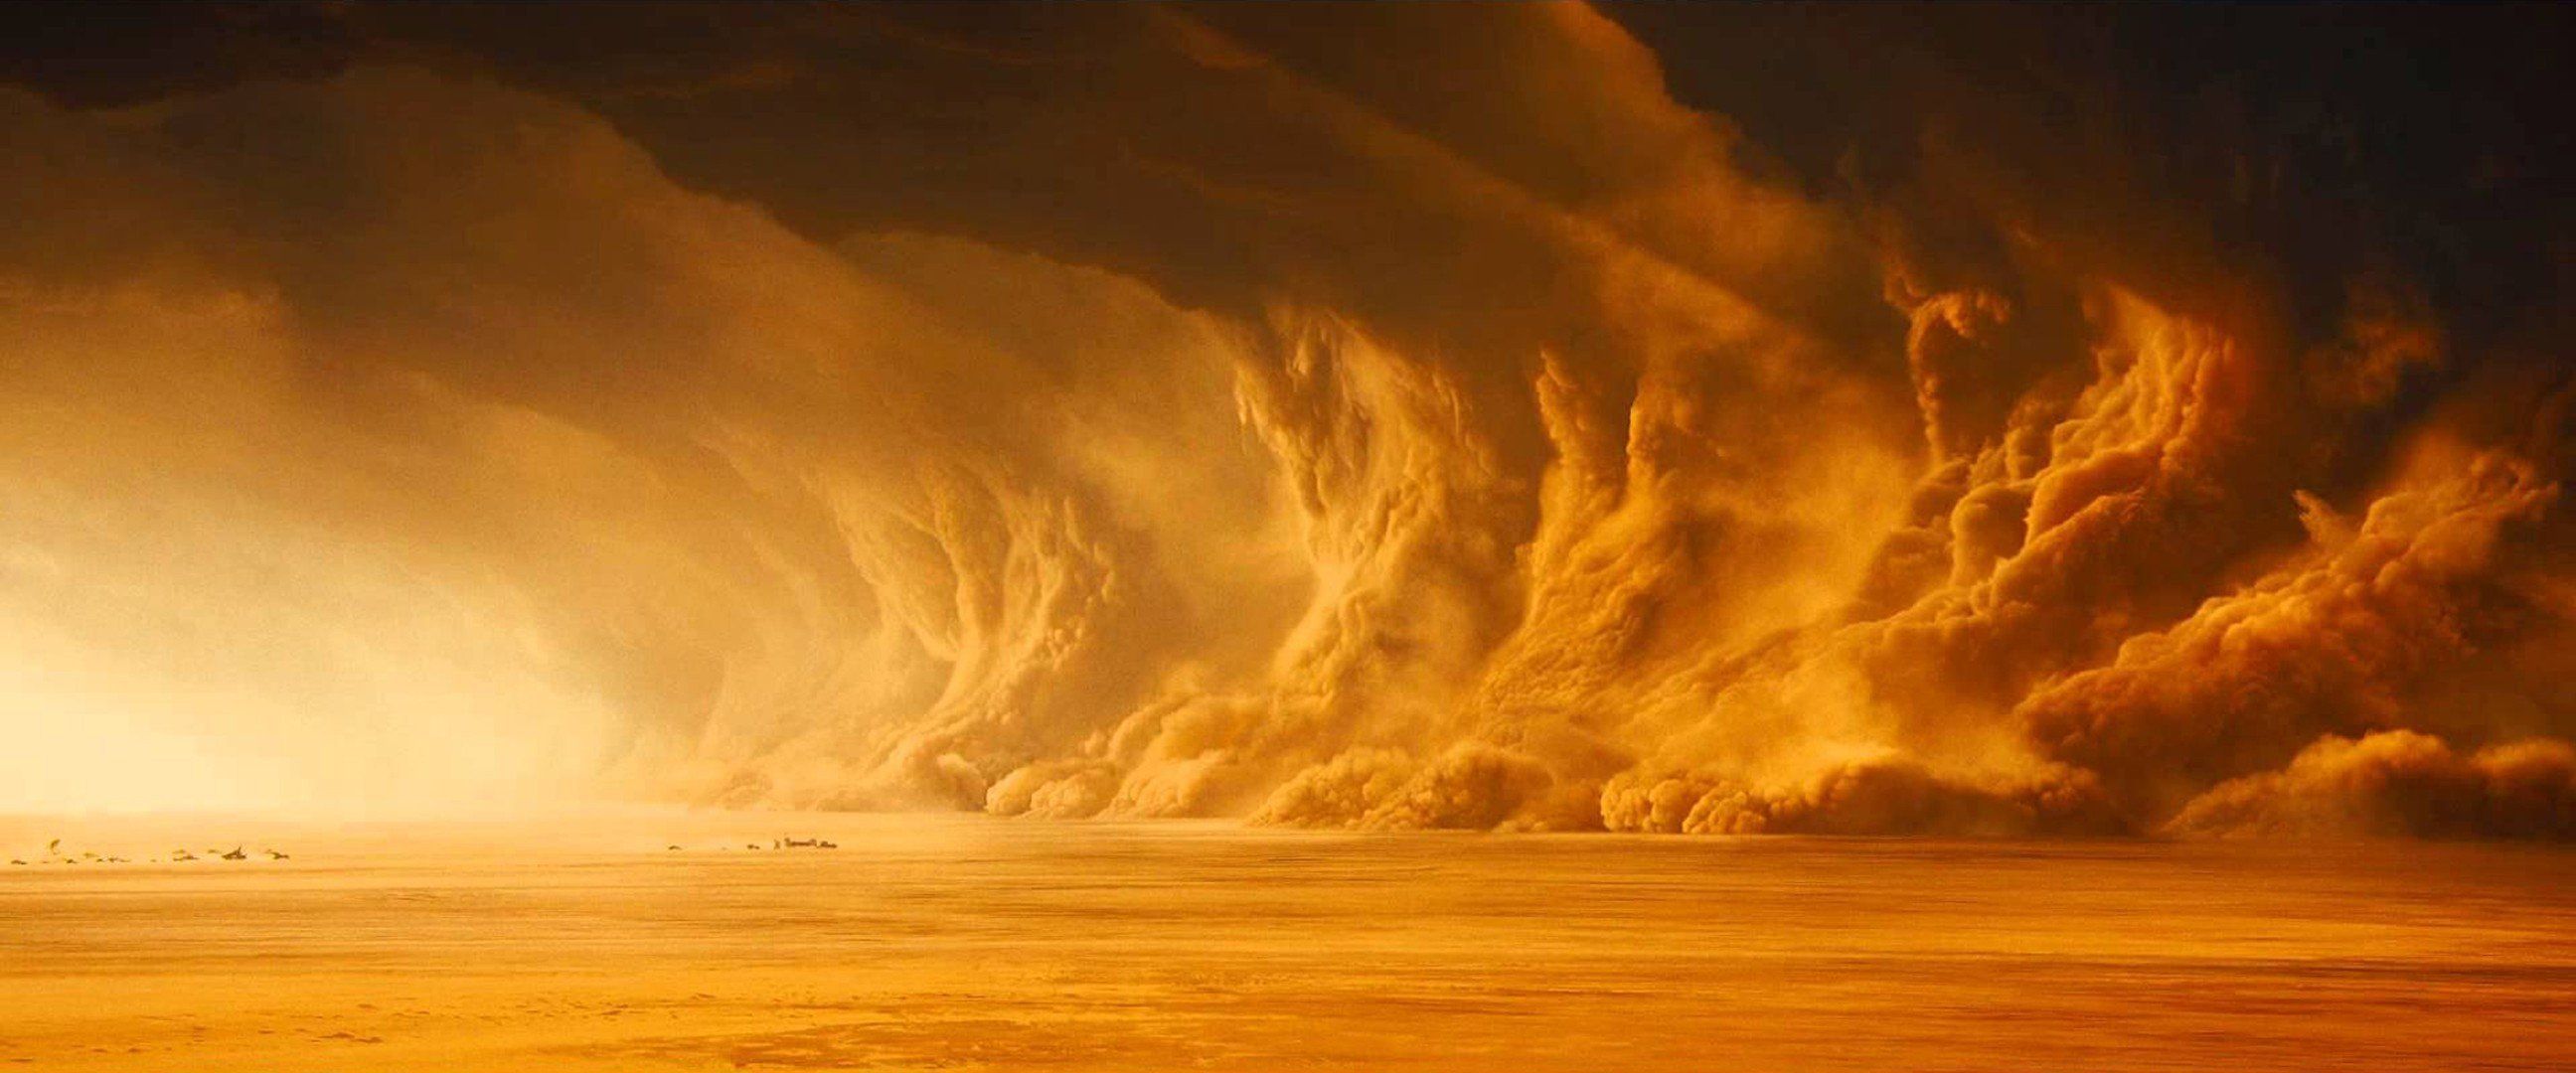 sandstorm after effects free download